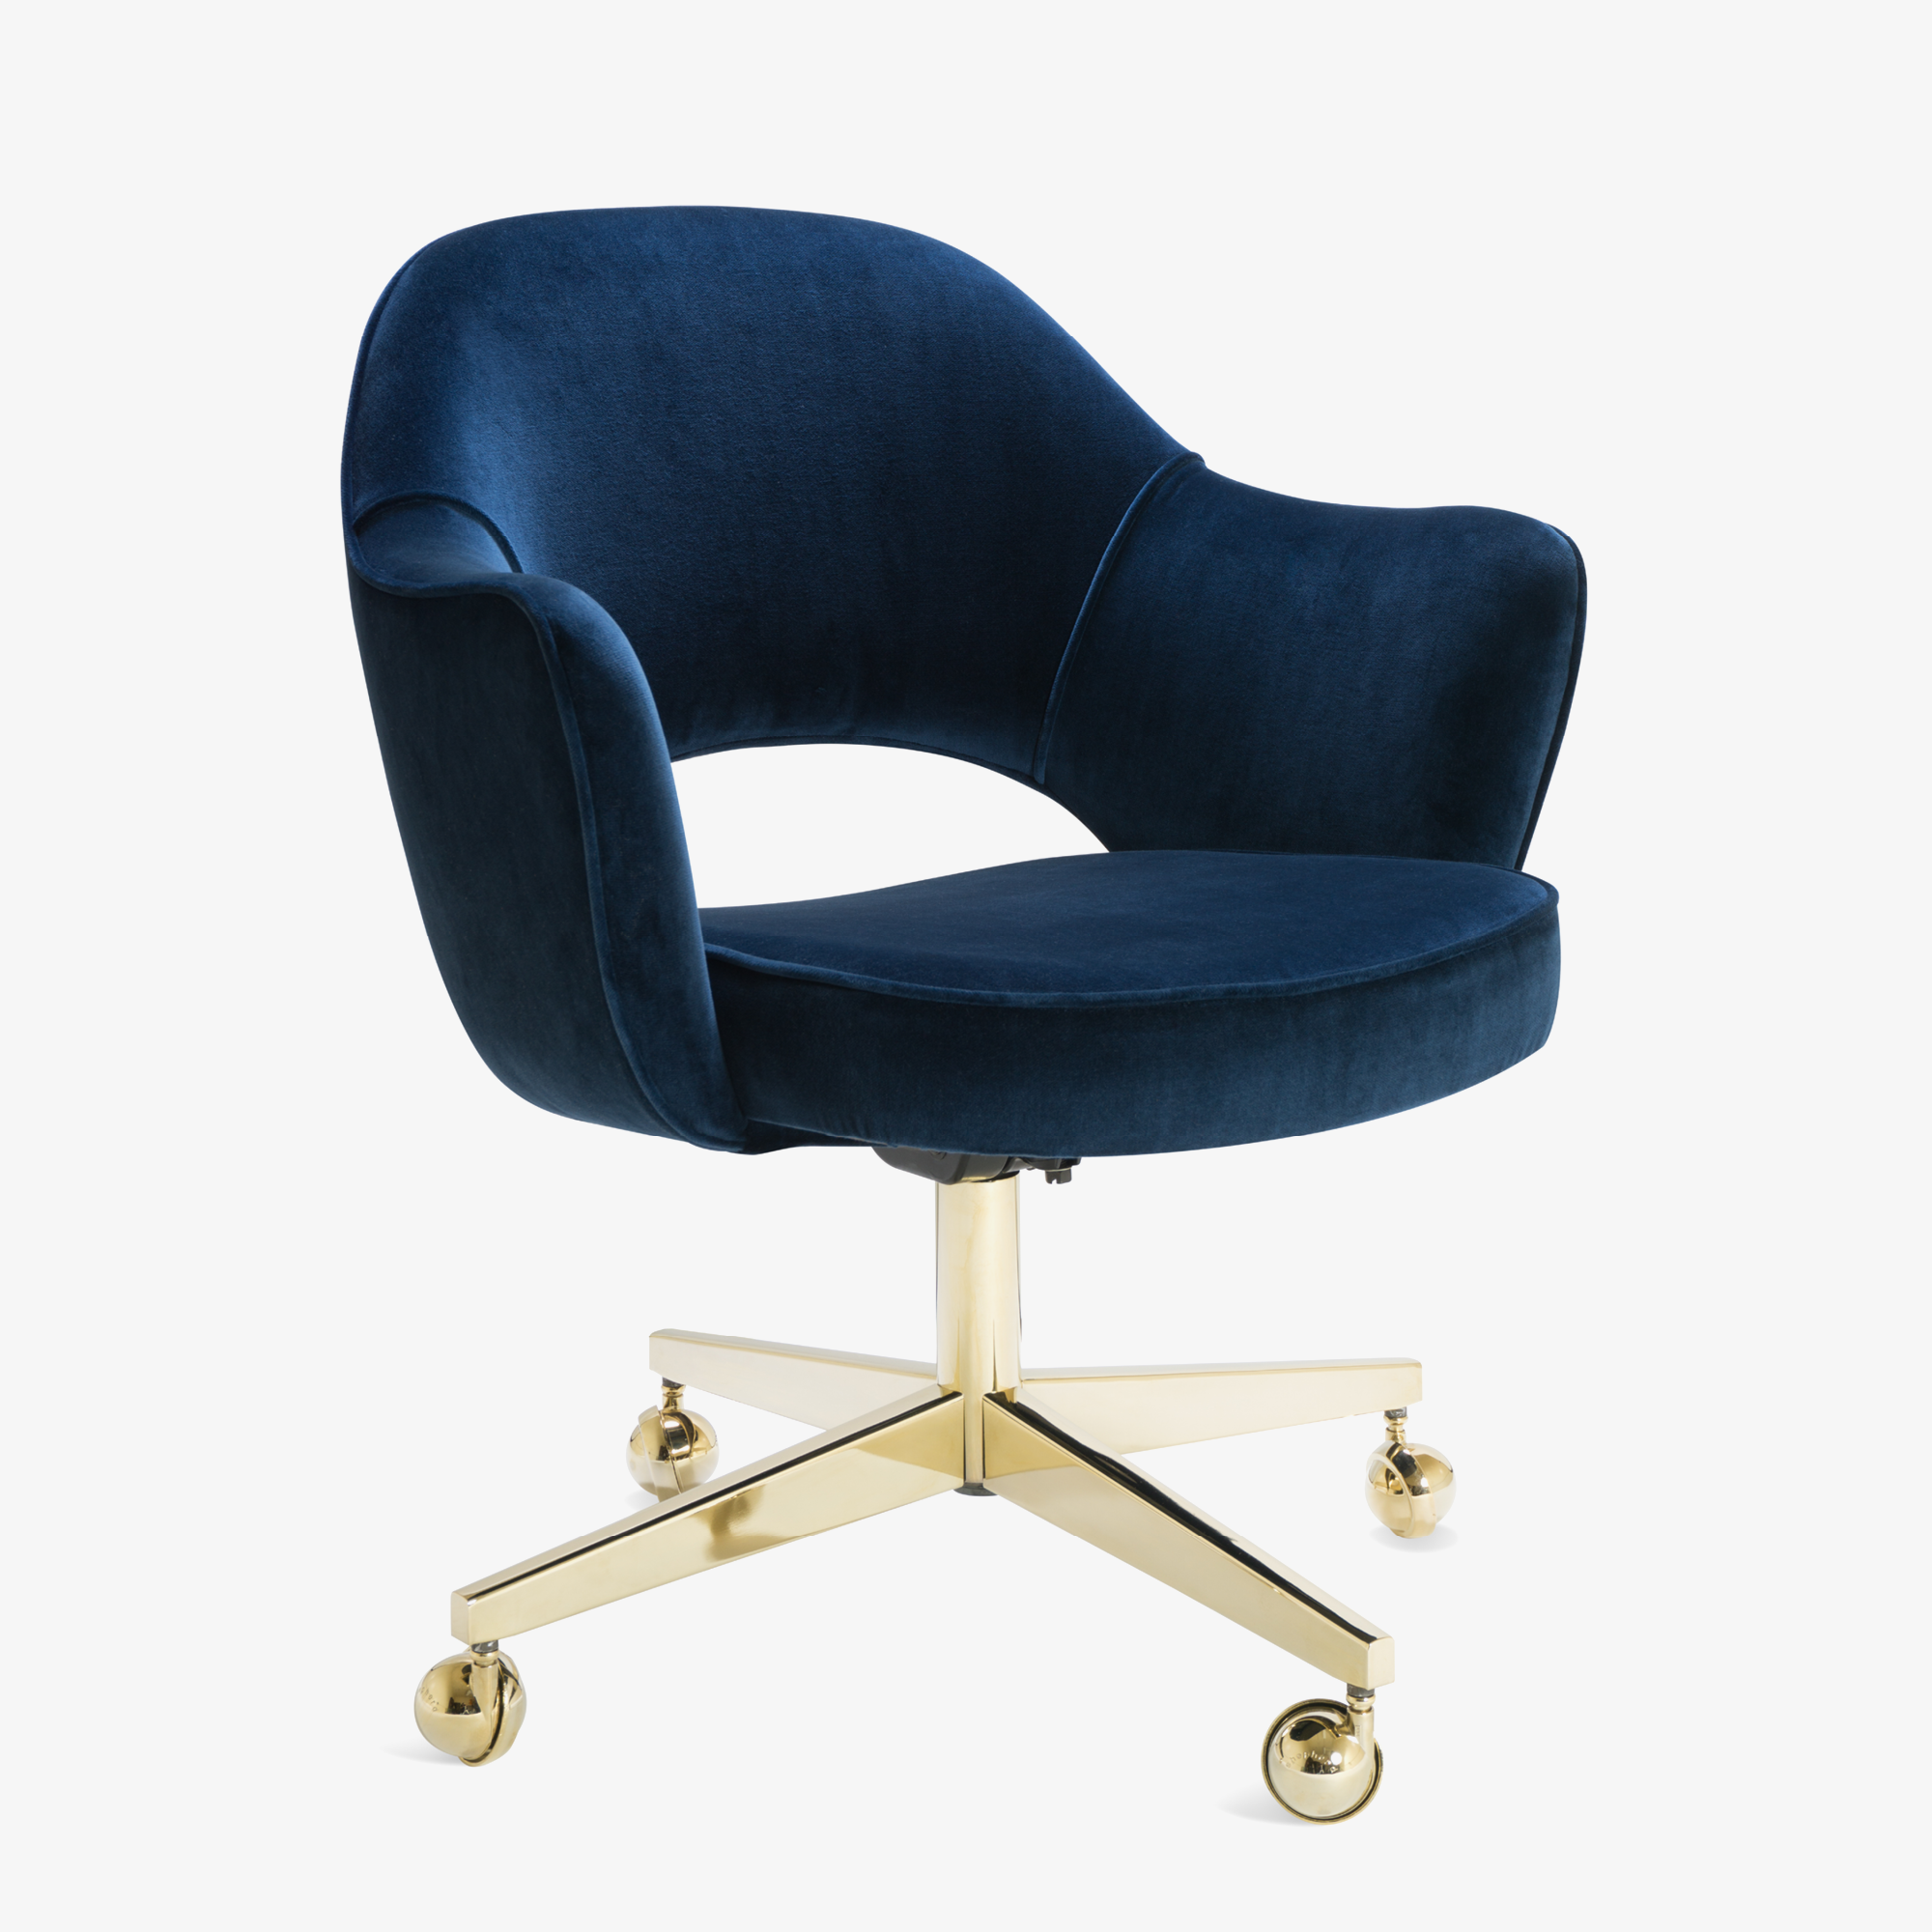 Saarinen Executive Arm Chair in Navy Velvet, Swivel Base, 24k Gold Edition3.png